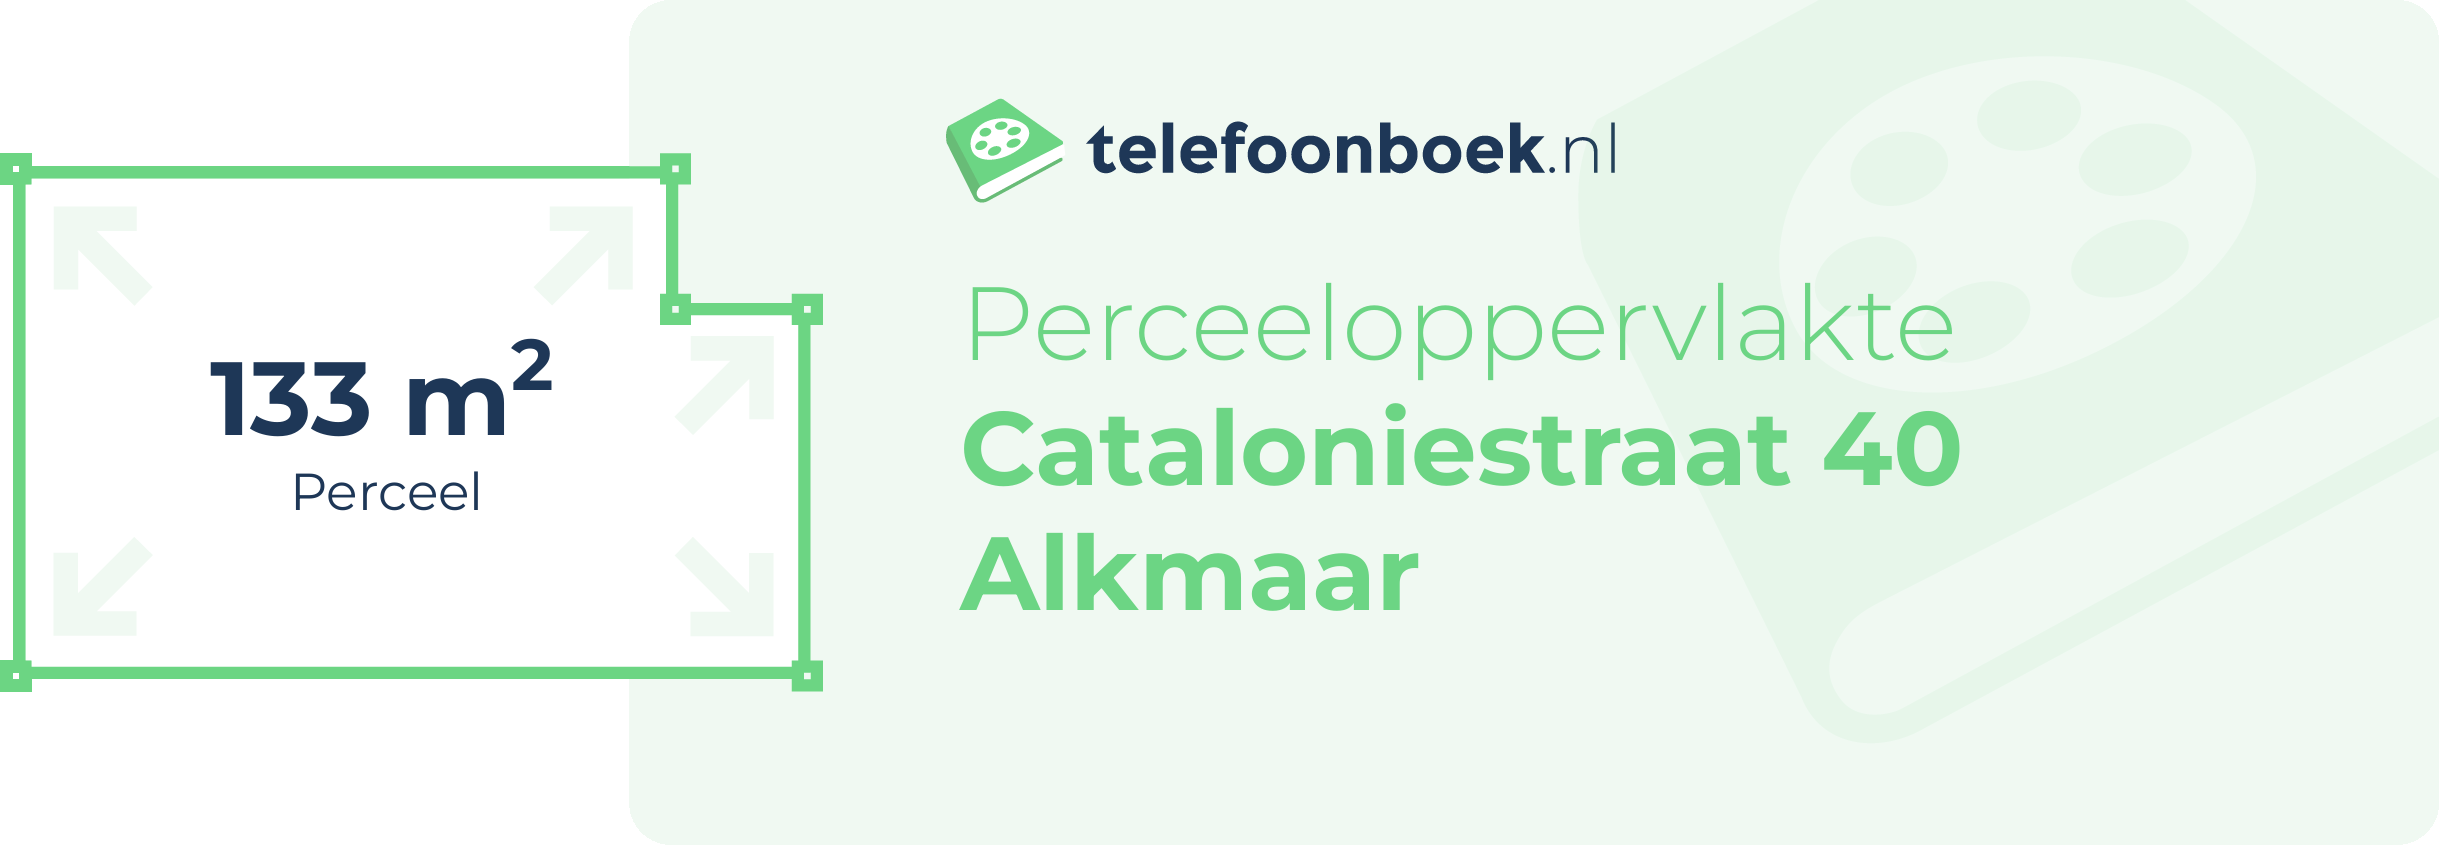 Perceeloppervlakte Cataloniestraat 40 Alkmaar